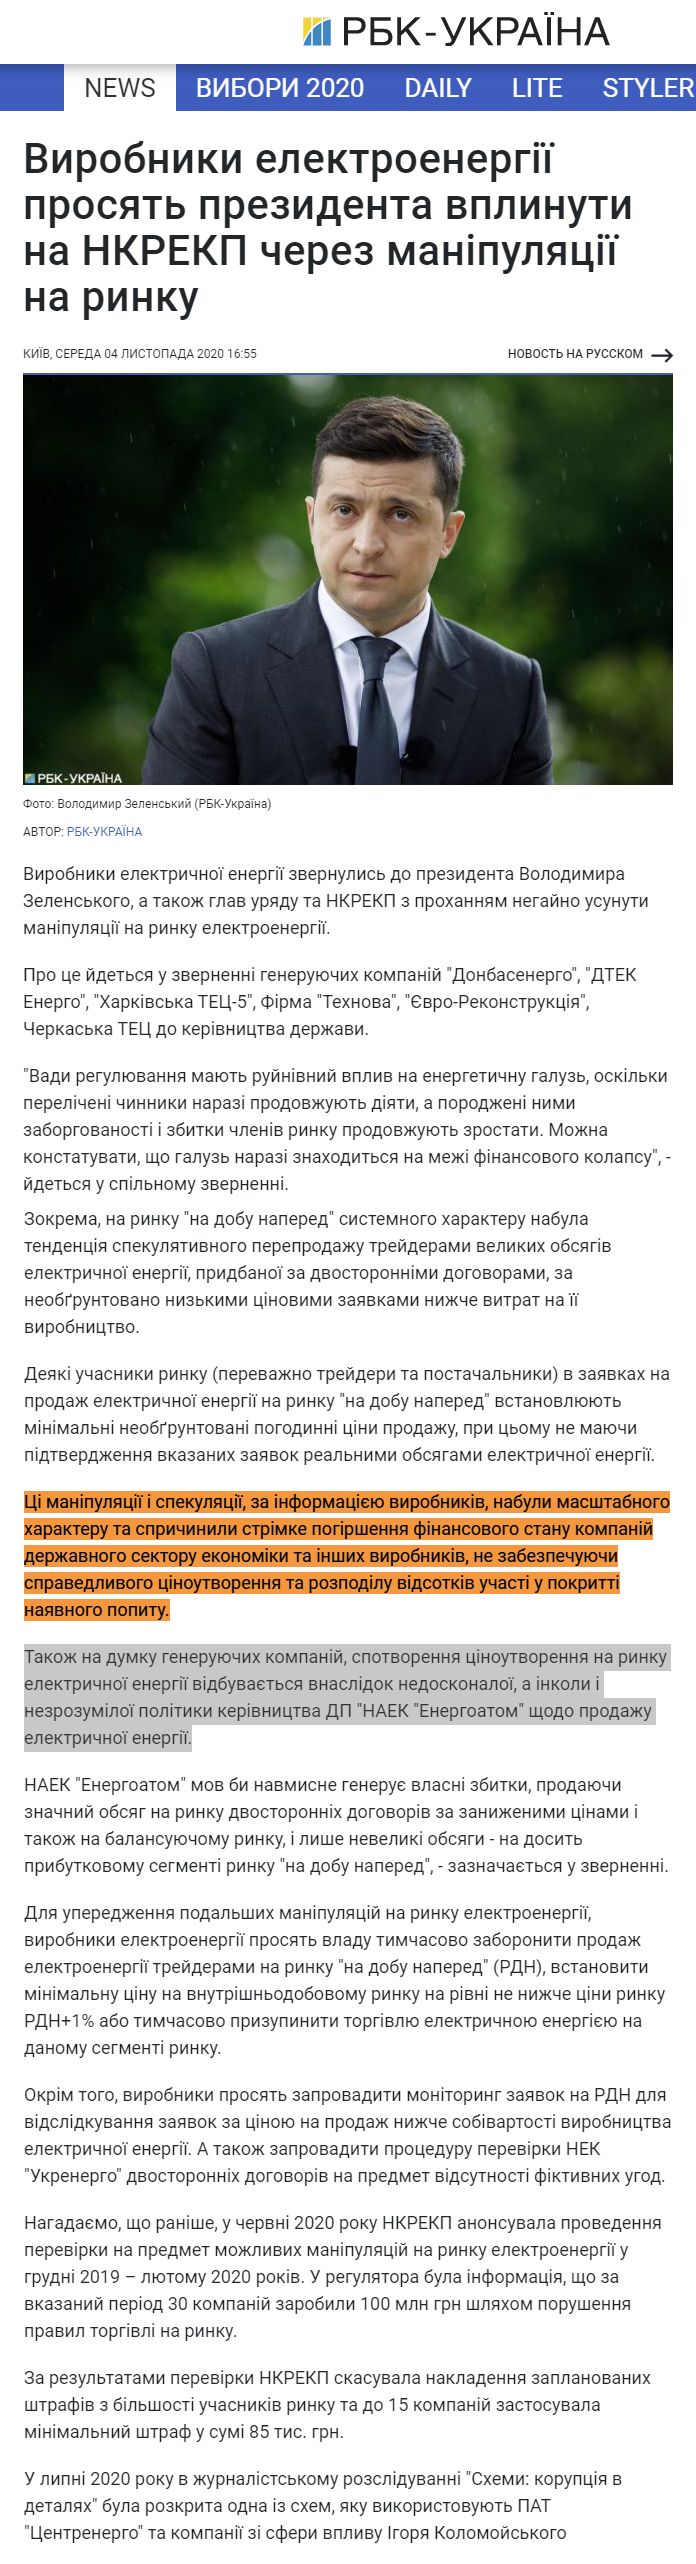 https://www.rbc.ua/ukr/news/proizvoditeli-elektroenergii-prosyat-prezidenta-1604501406.html